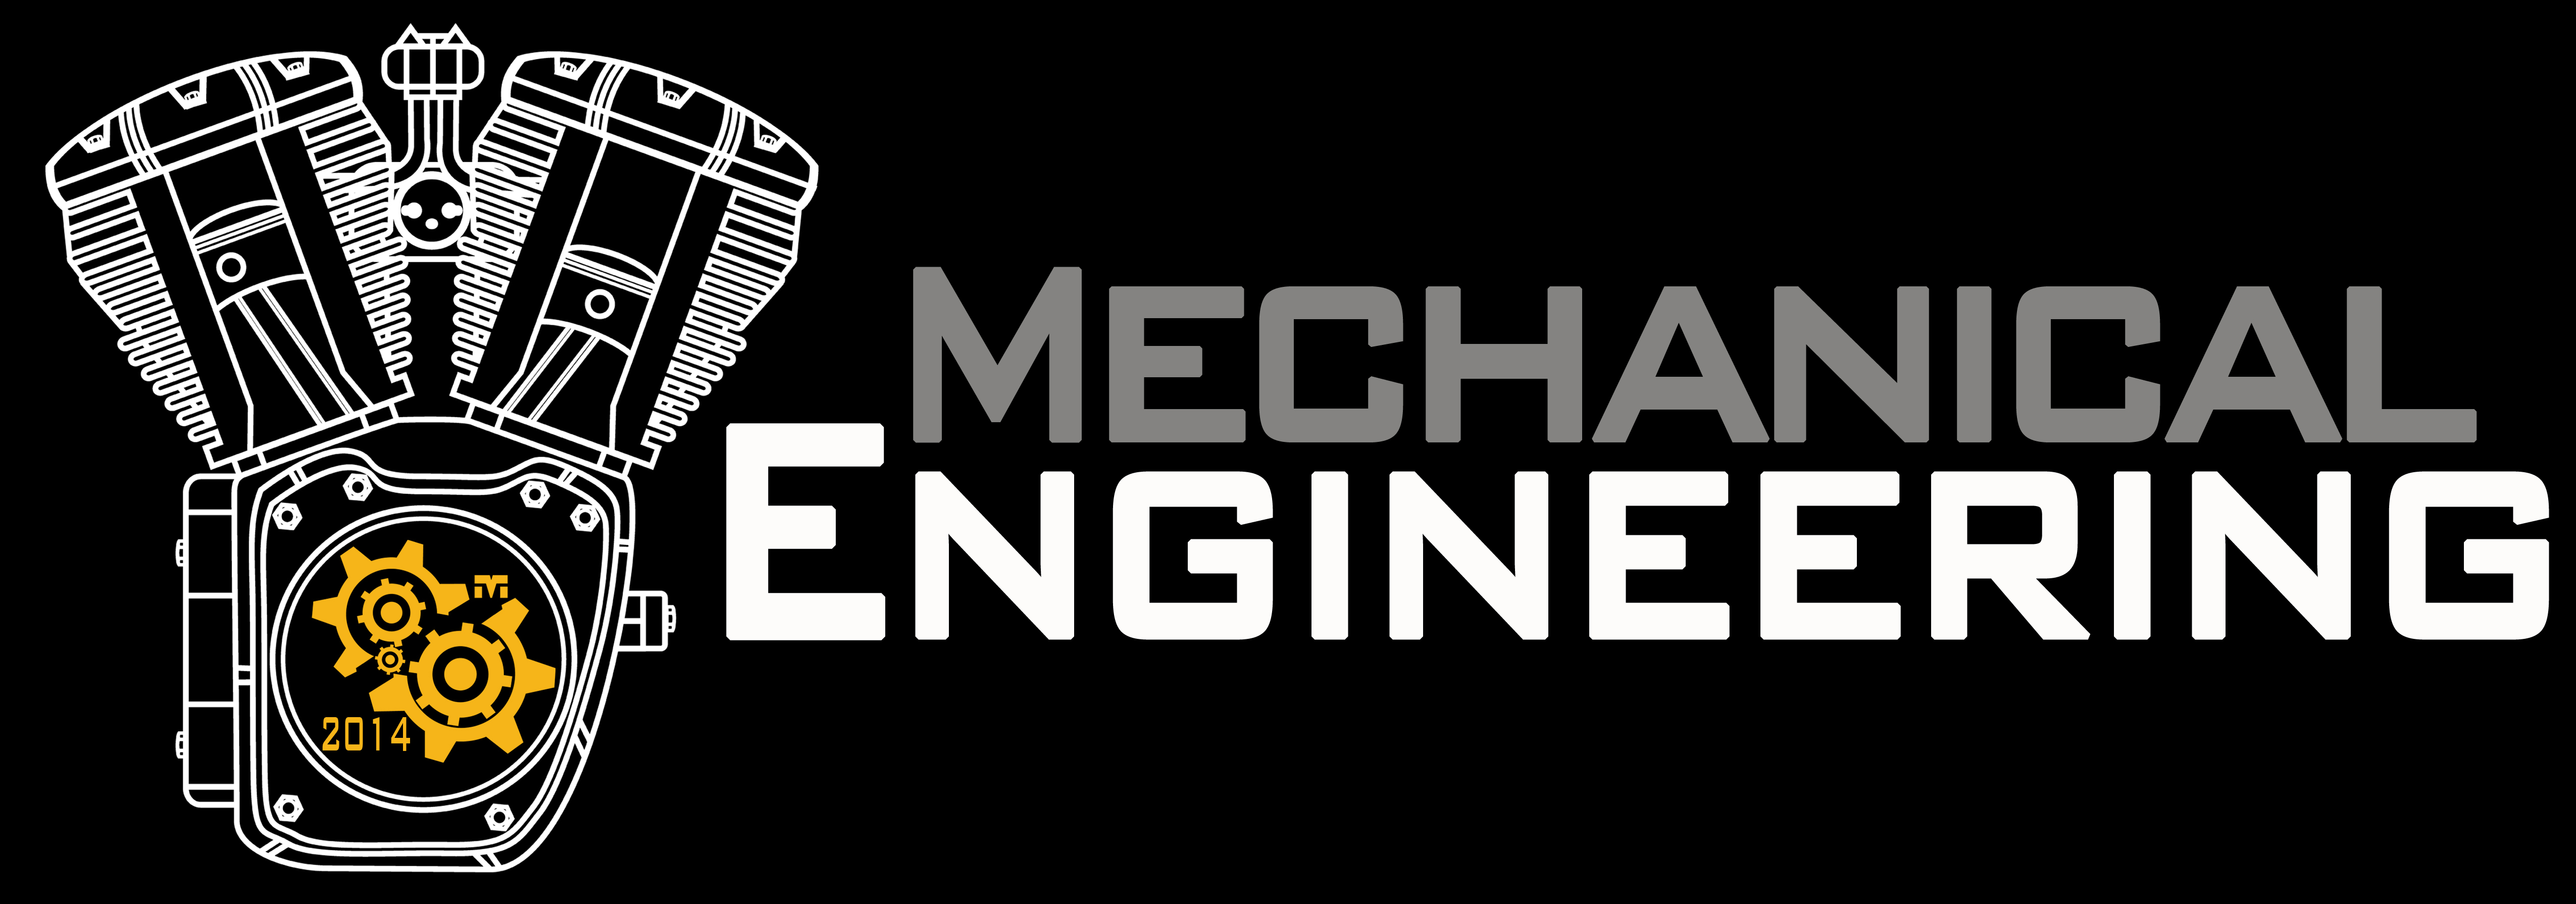 Mechanical Engineering Logos